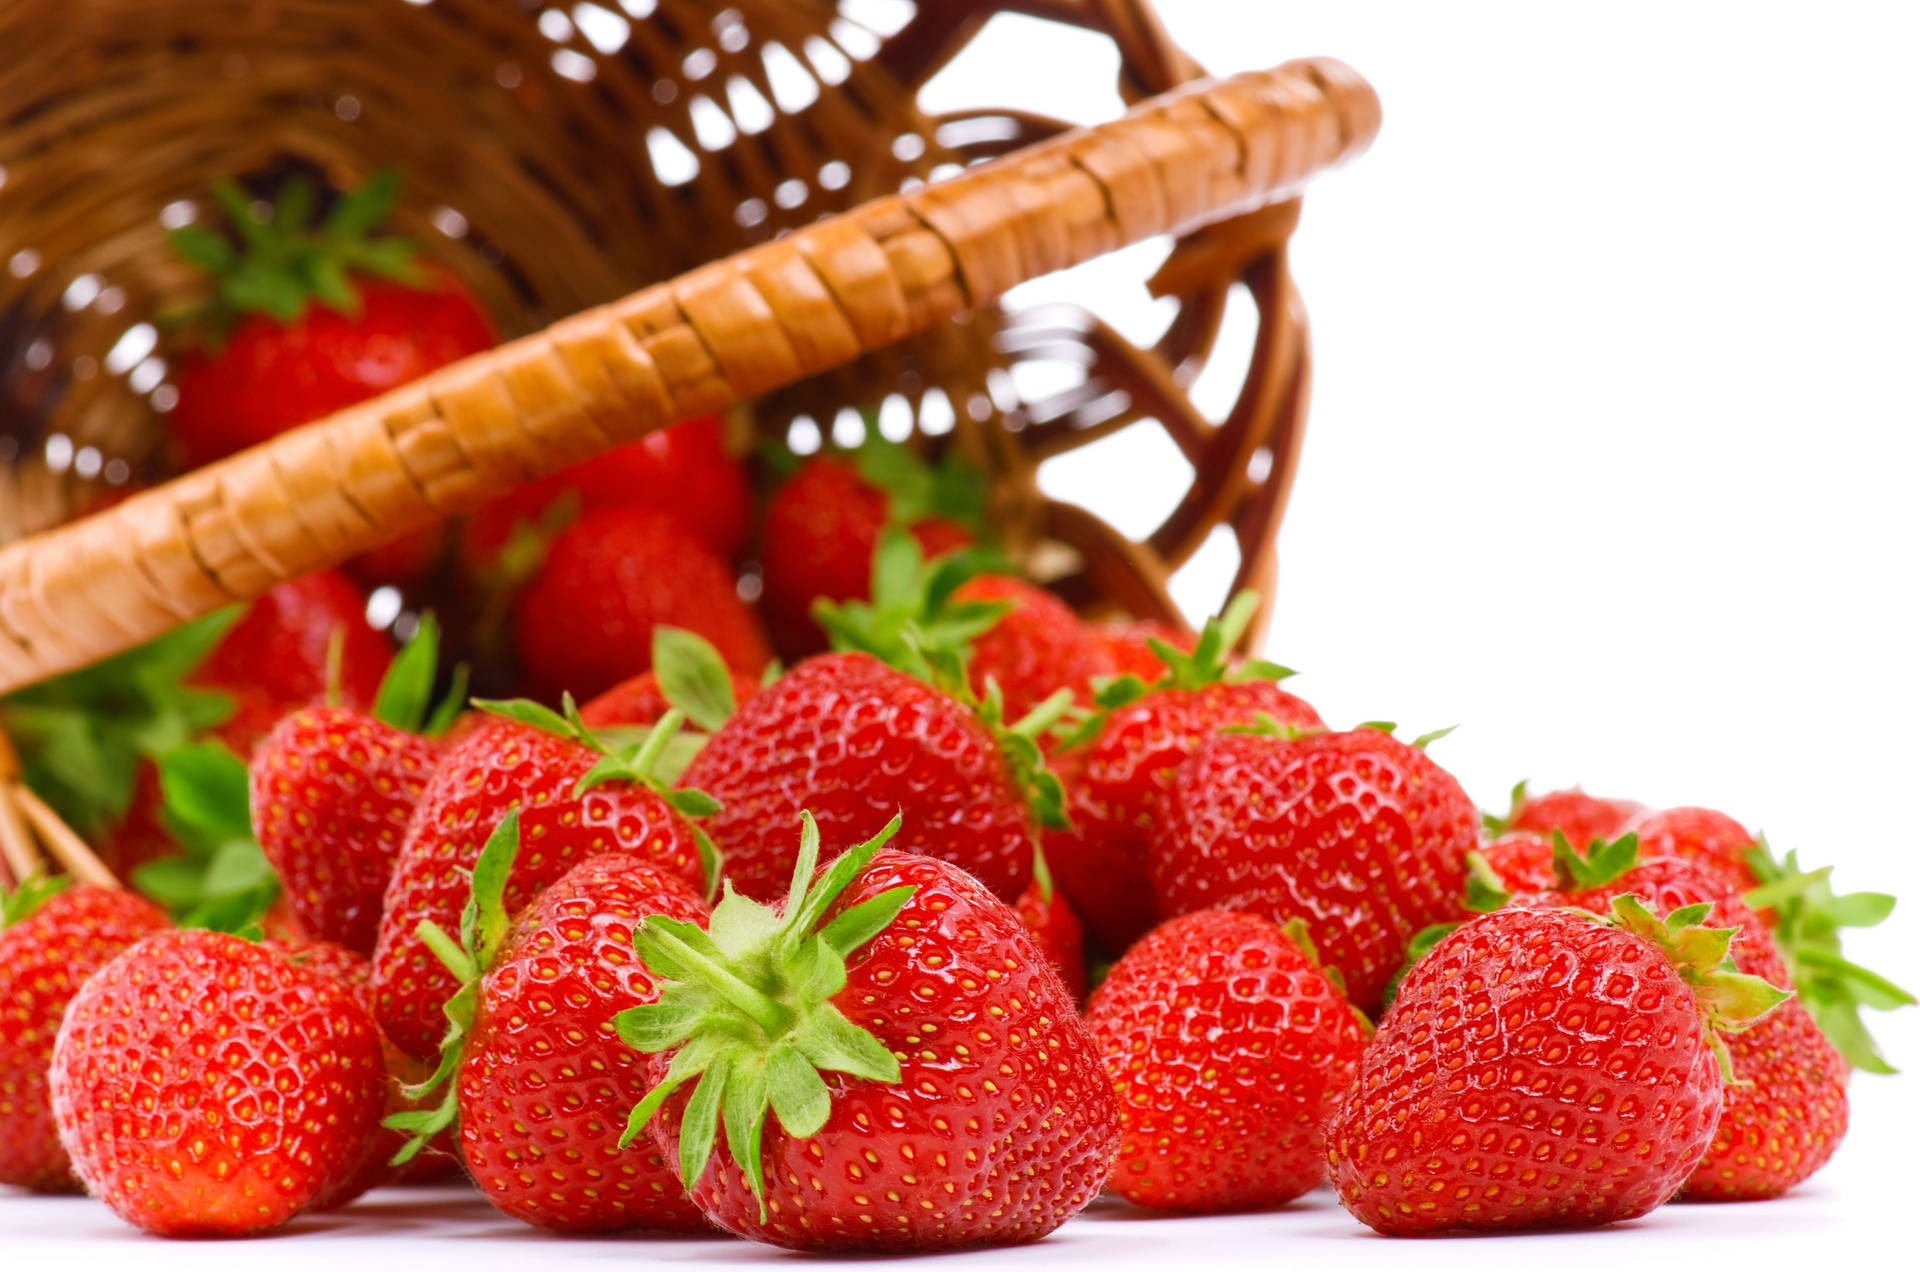 Strawberries Spilling From Basket